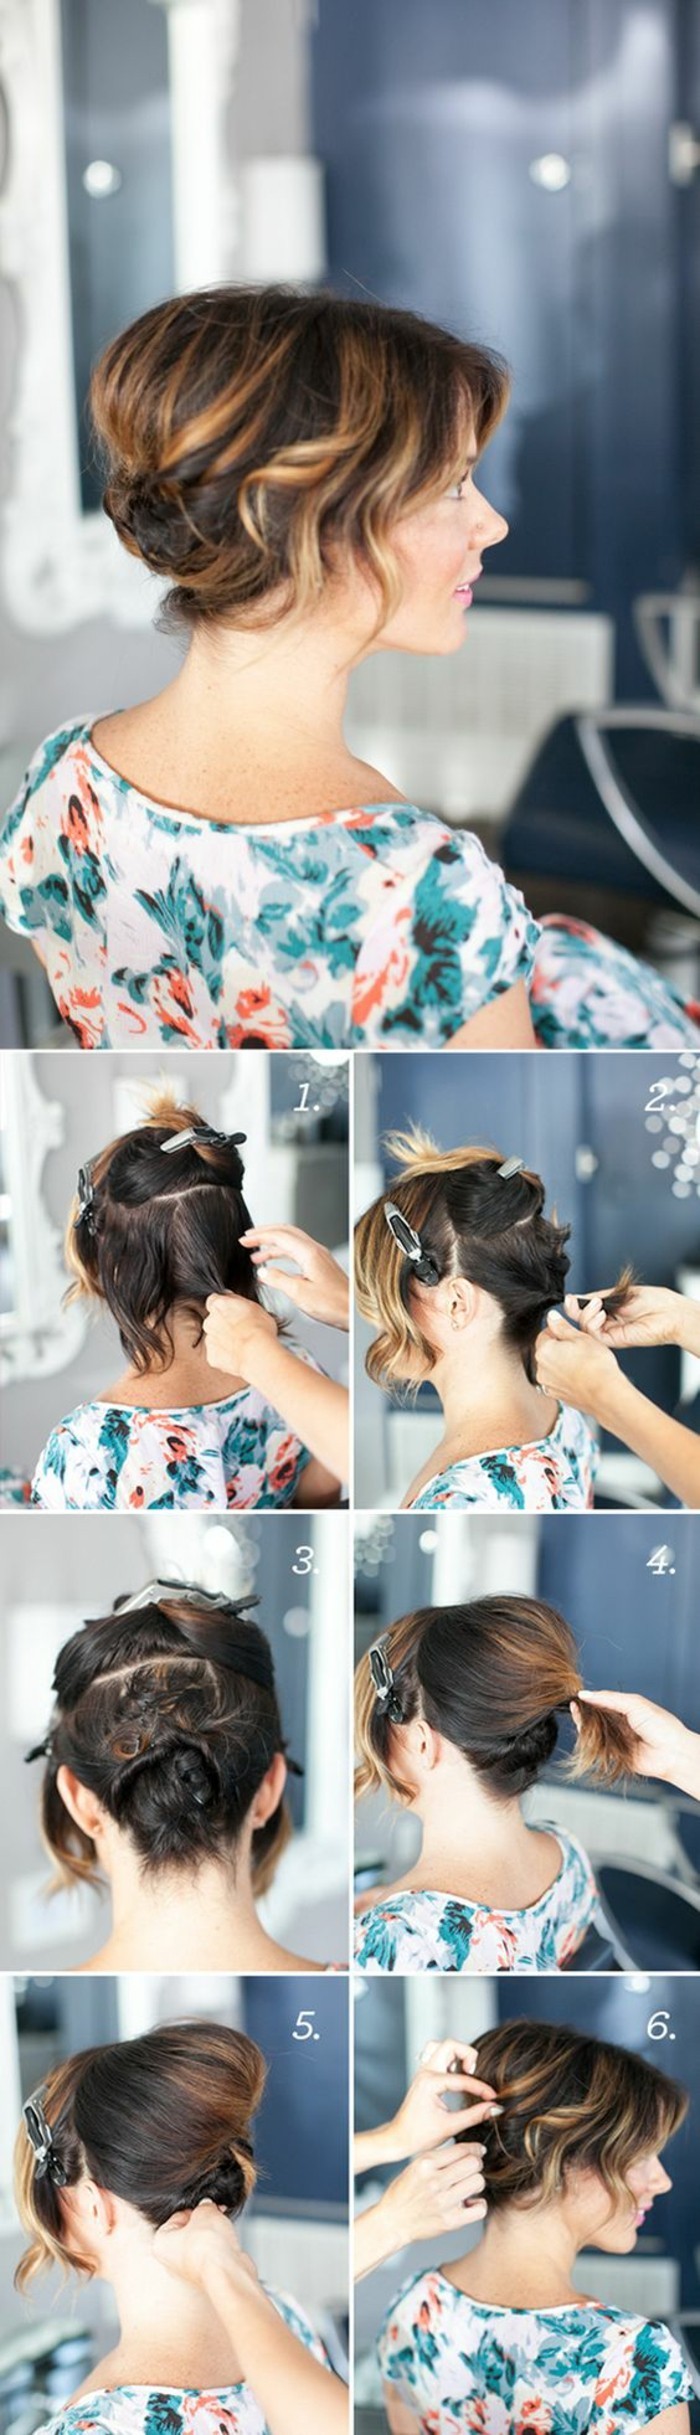 updo hairstyles-εγχειρίδιο-κοντά καστανά σγουρά μαλλιά-pin up-diy-χτένισμα-πολύχρωμο-μπλούζα-γυναίκα